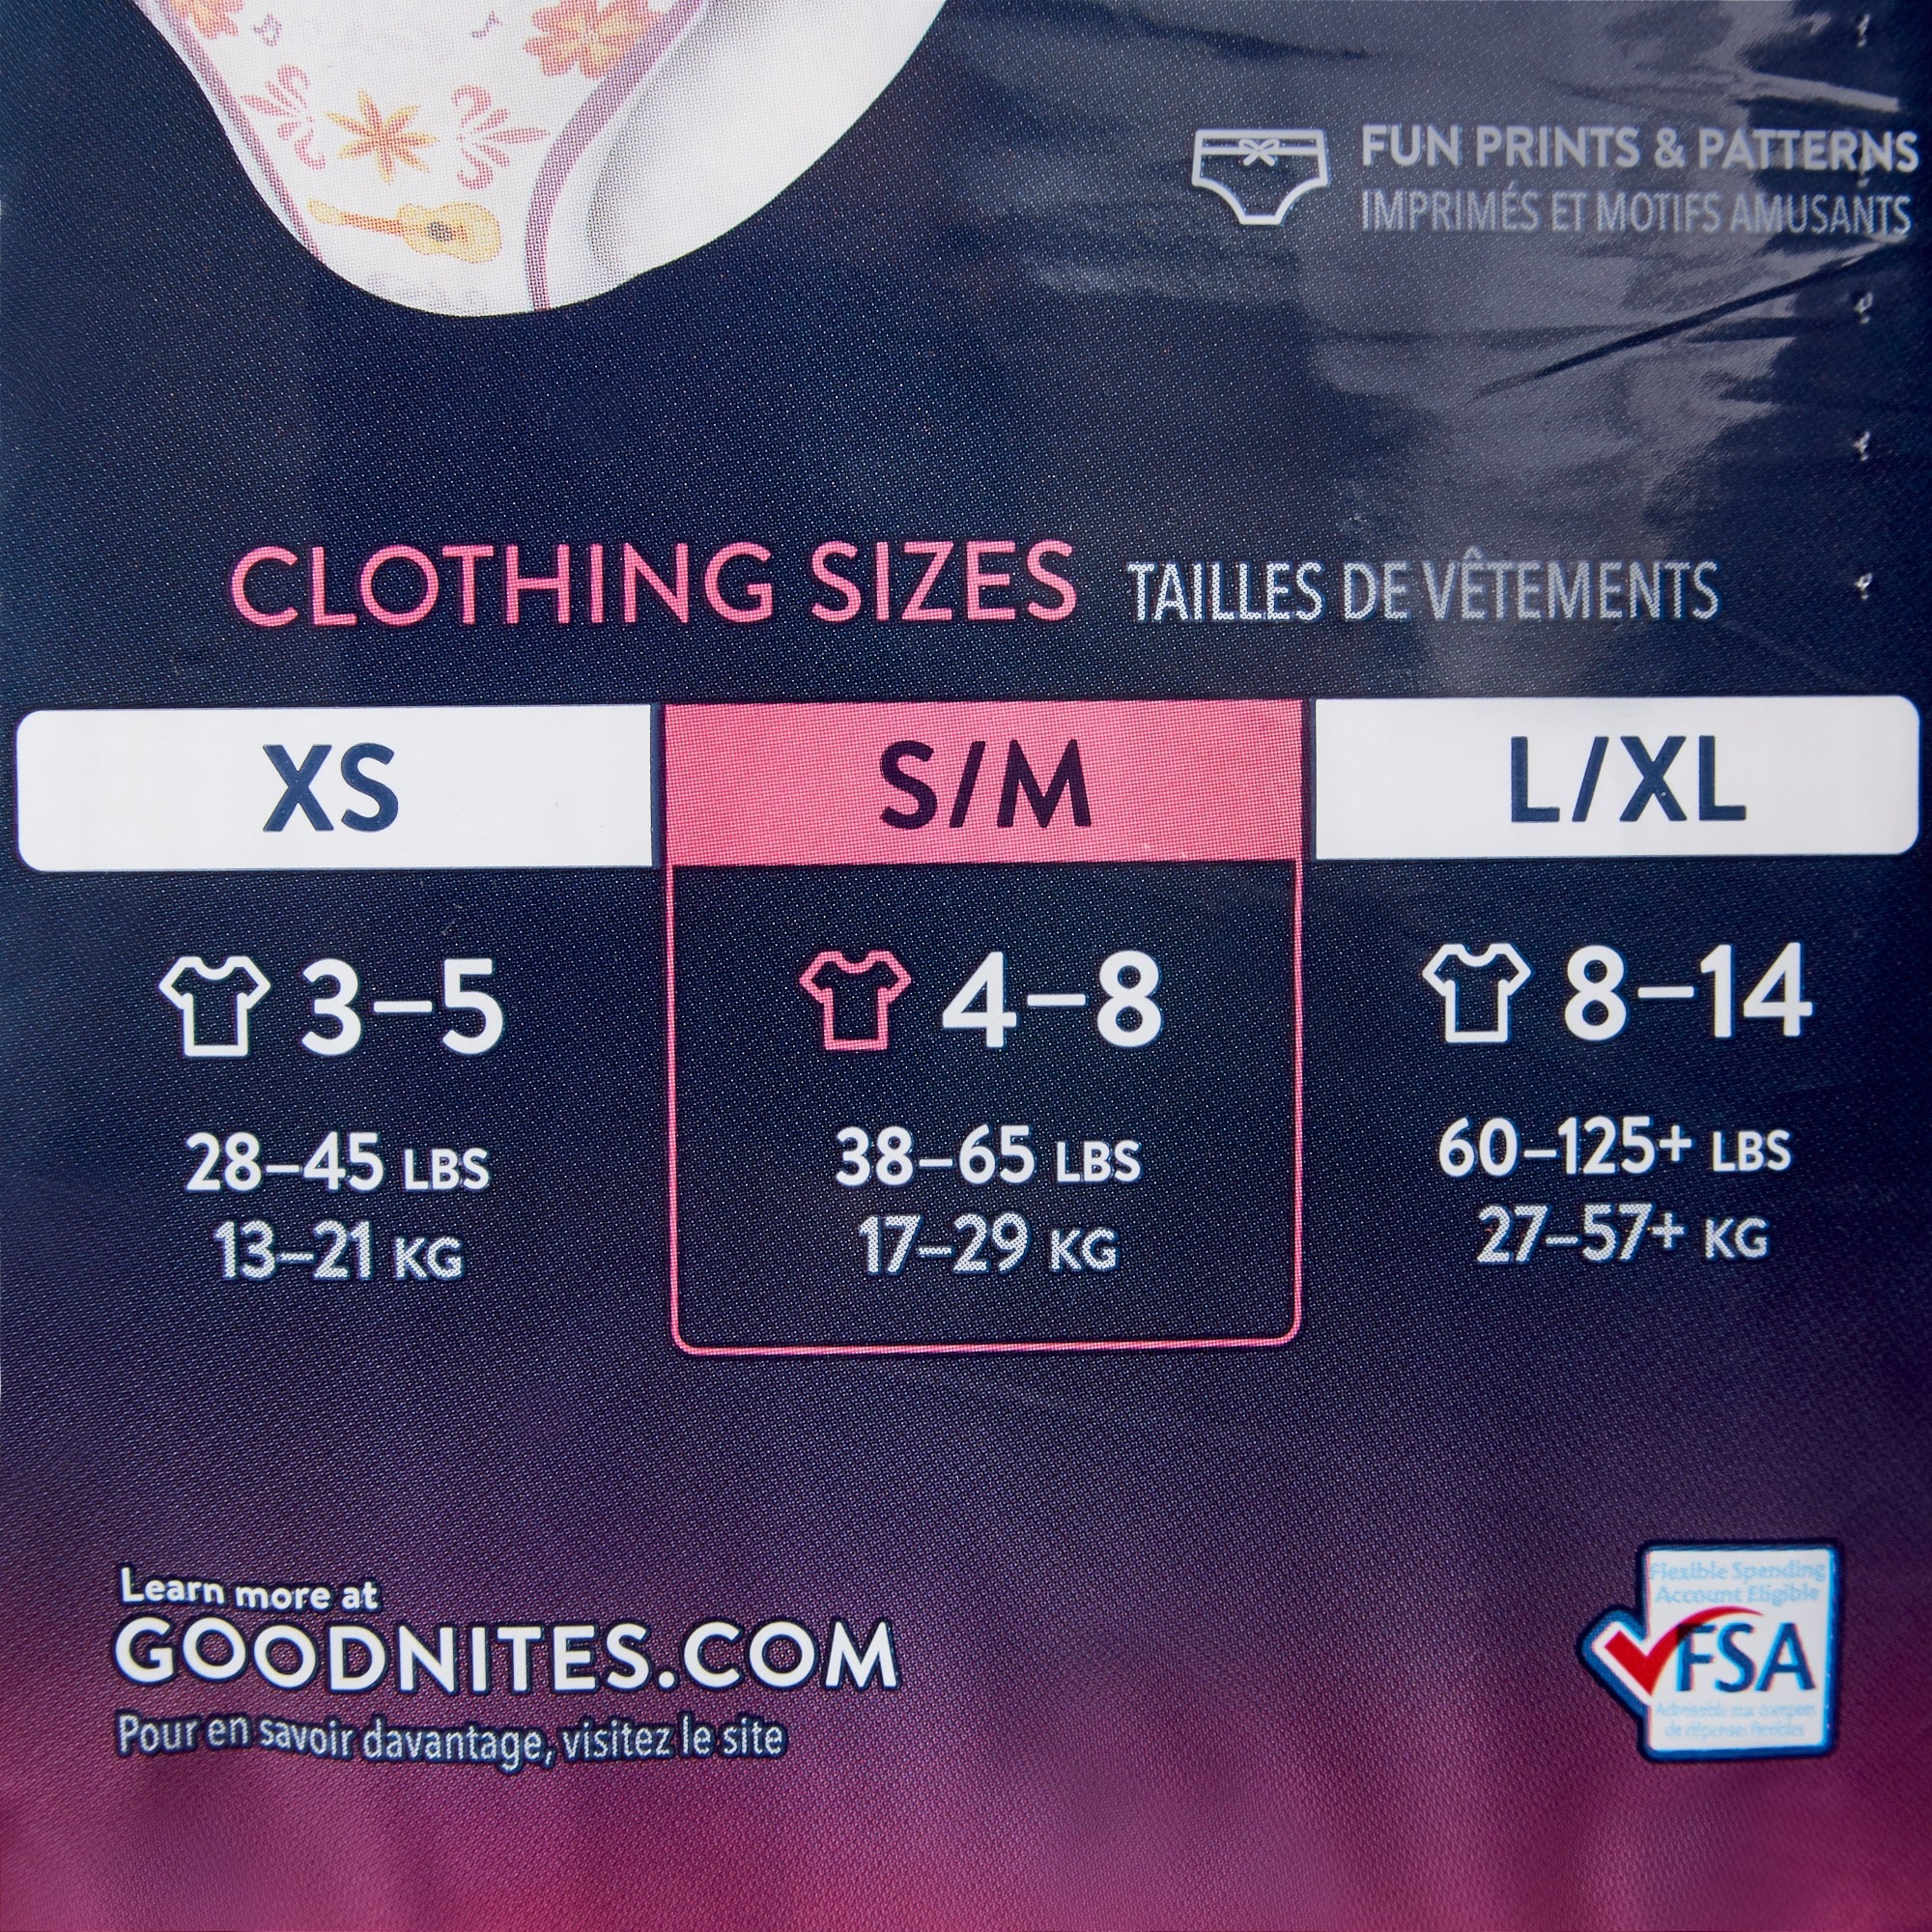 GoodNites® Absorbent Underwear, Small / Medium, 14 per Package